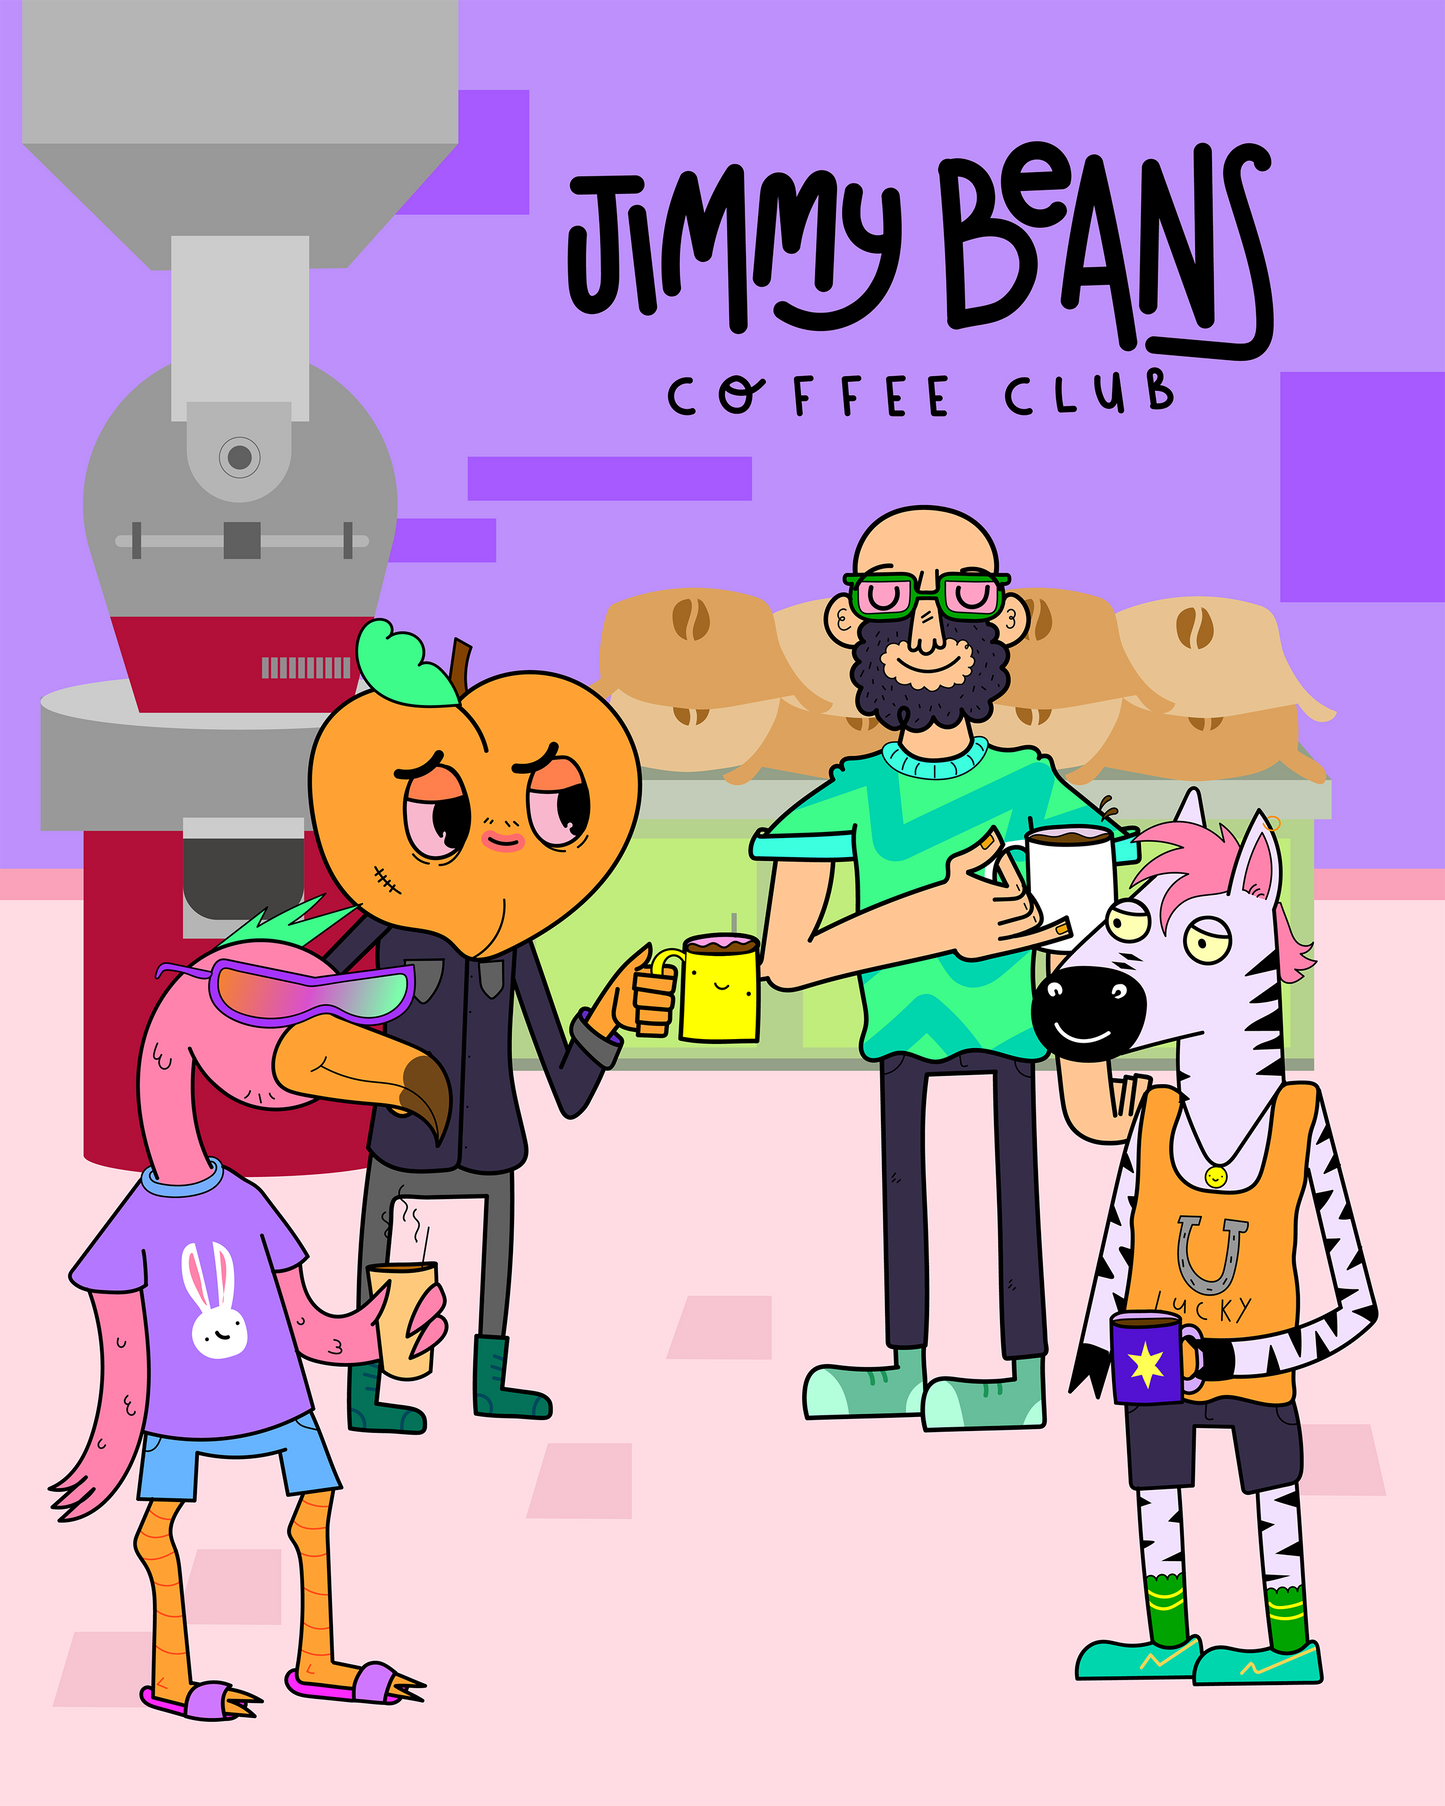 Jimmy Bean's Coffee Club